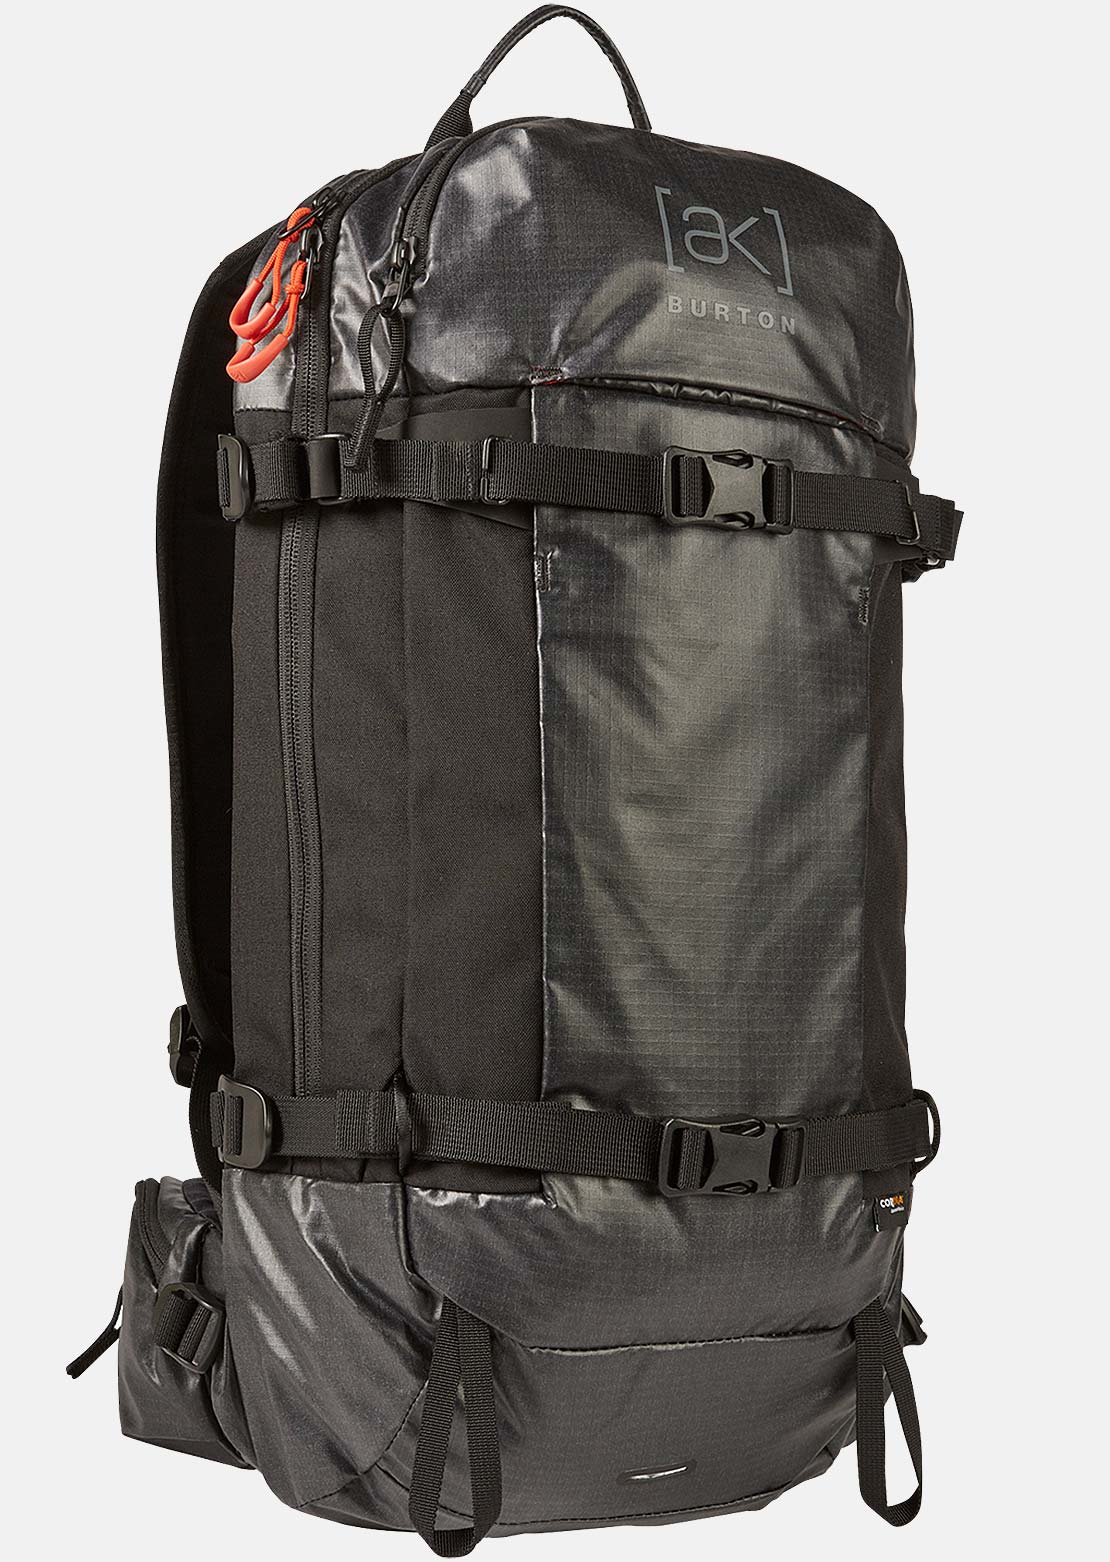 Burton AK Dispatcher 18L Backpack True Black